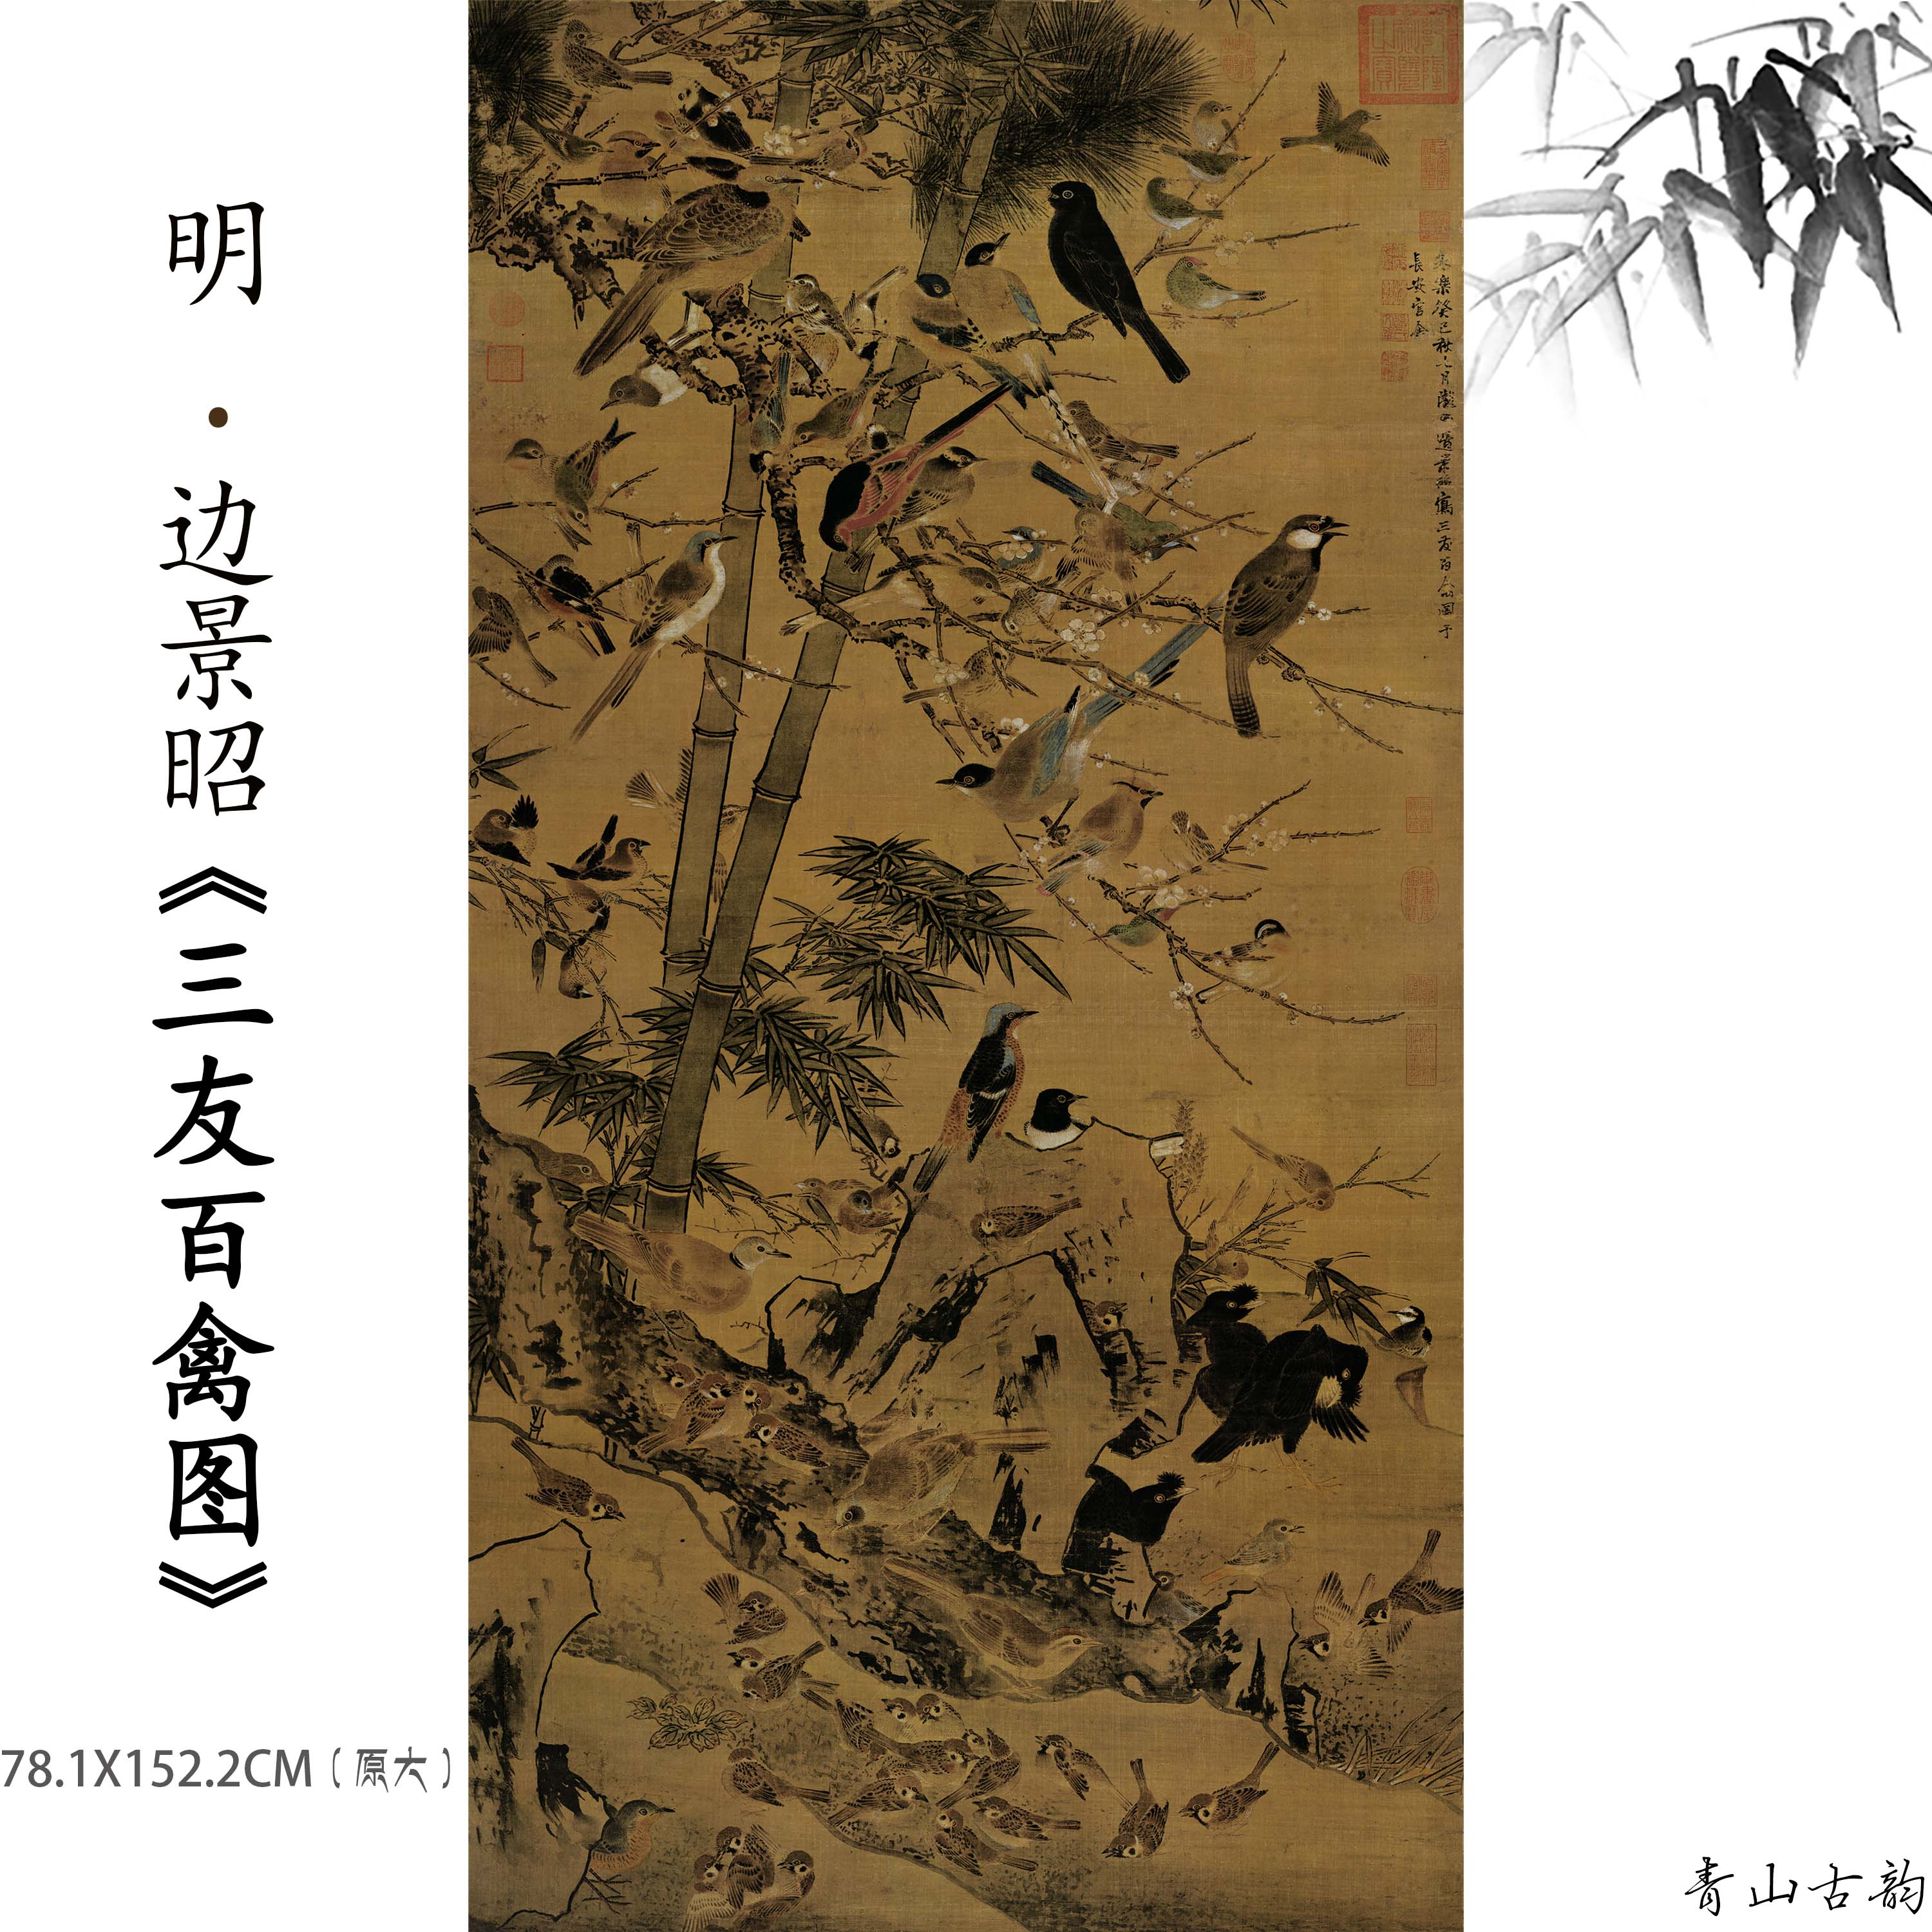 Chinese Antique Art Painting 1:1 明 边景昭 三友百禽图 Ming Bian Jingzhao San You Bai Qin